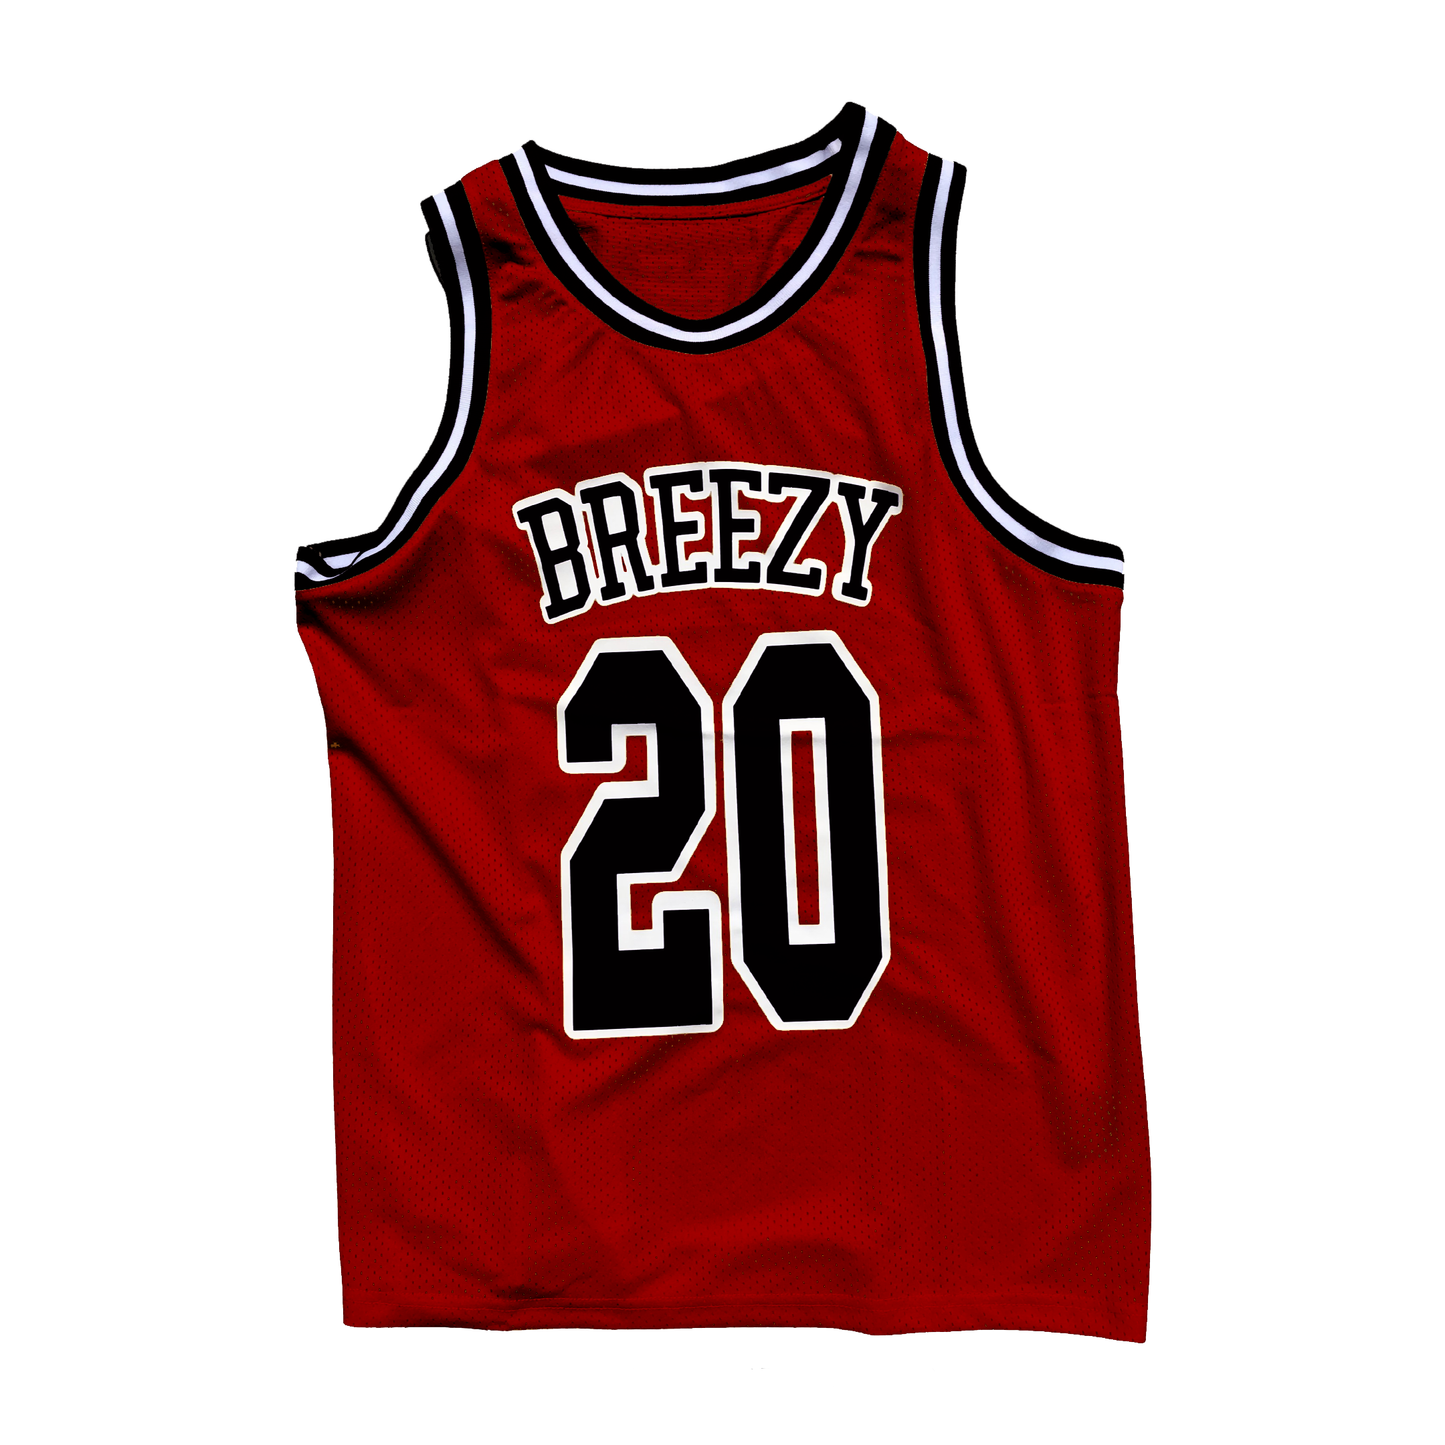 Red Basketball Jersey - Breezy Season 